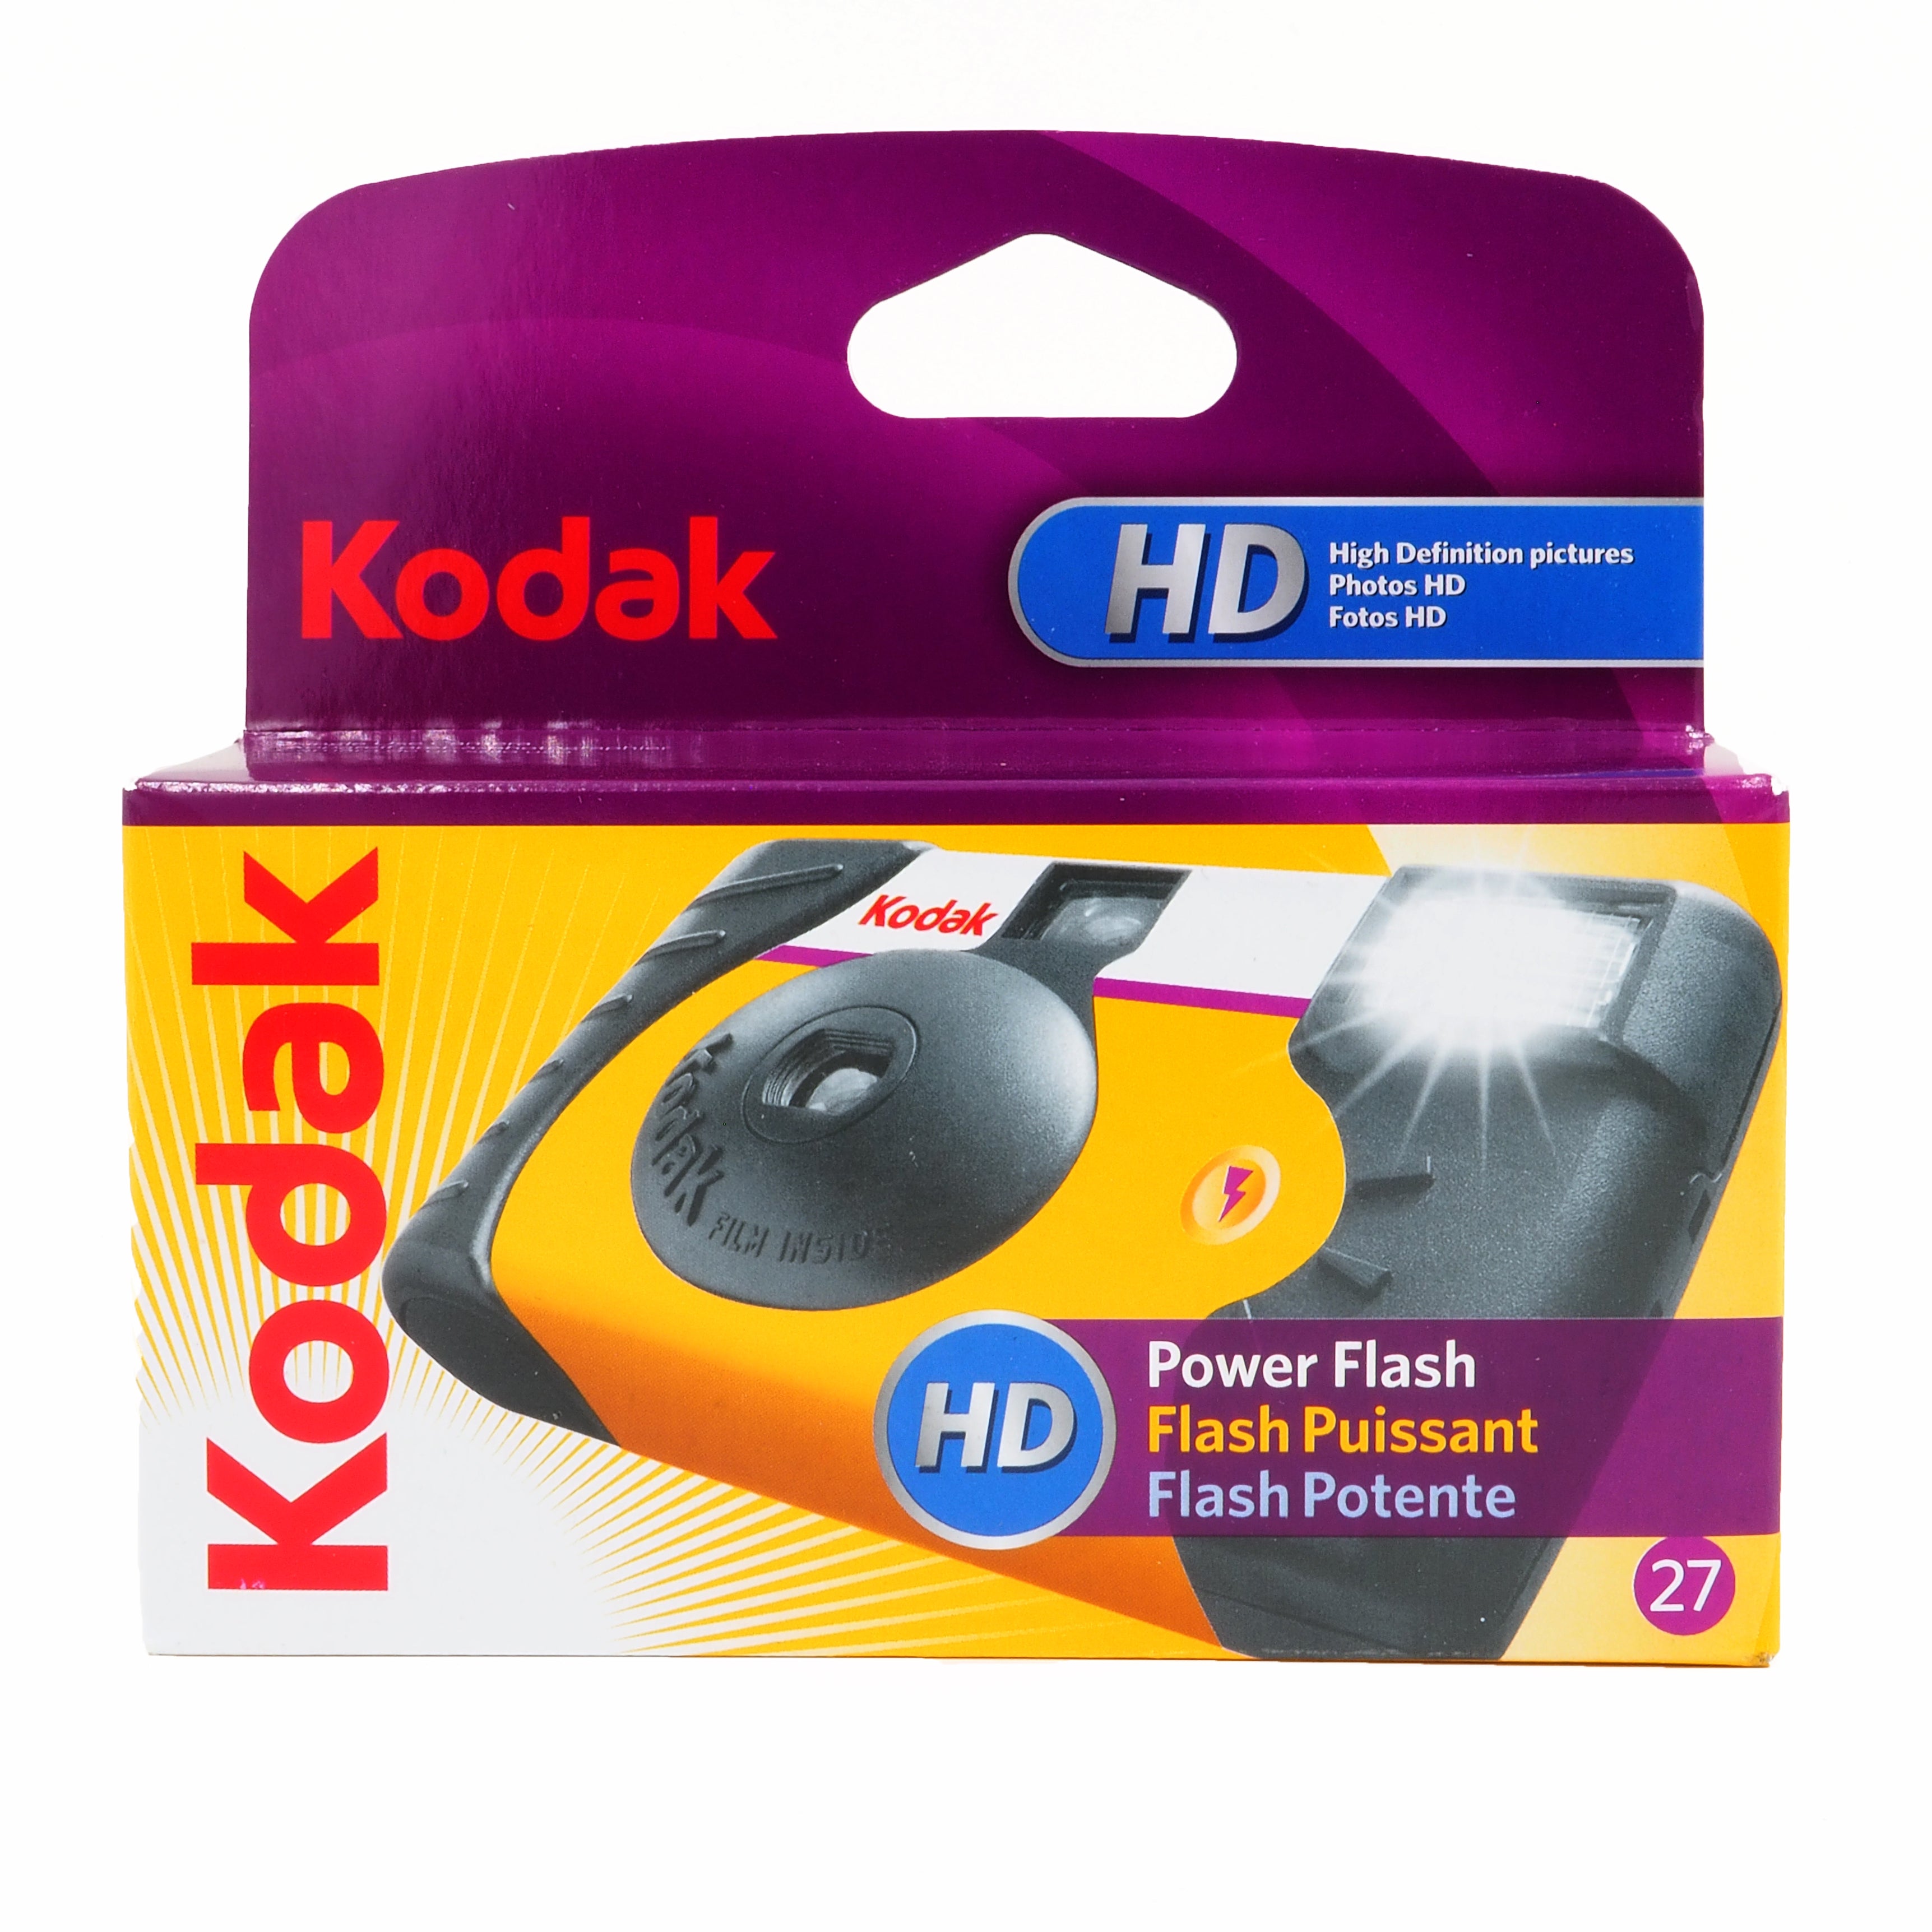 Kodak FunSaver Disposable Camera with Flash 800 ISO